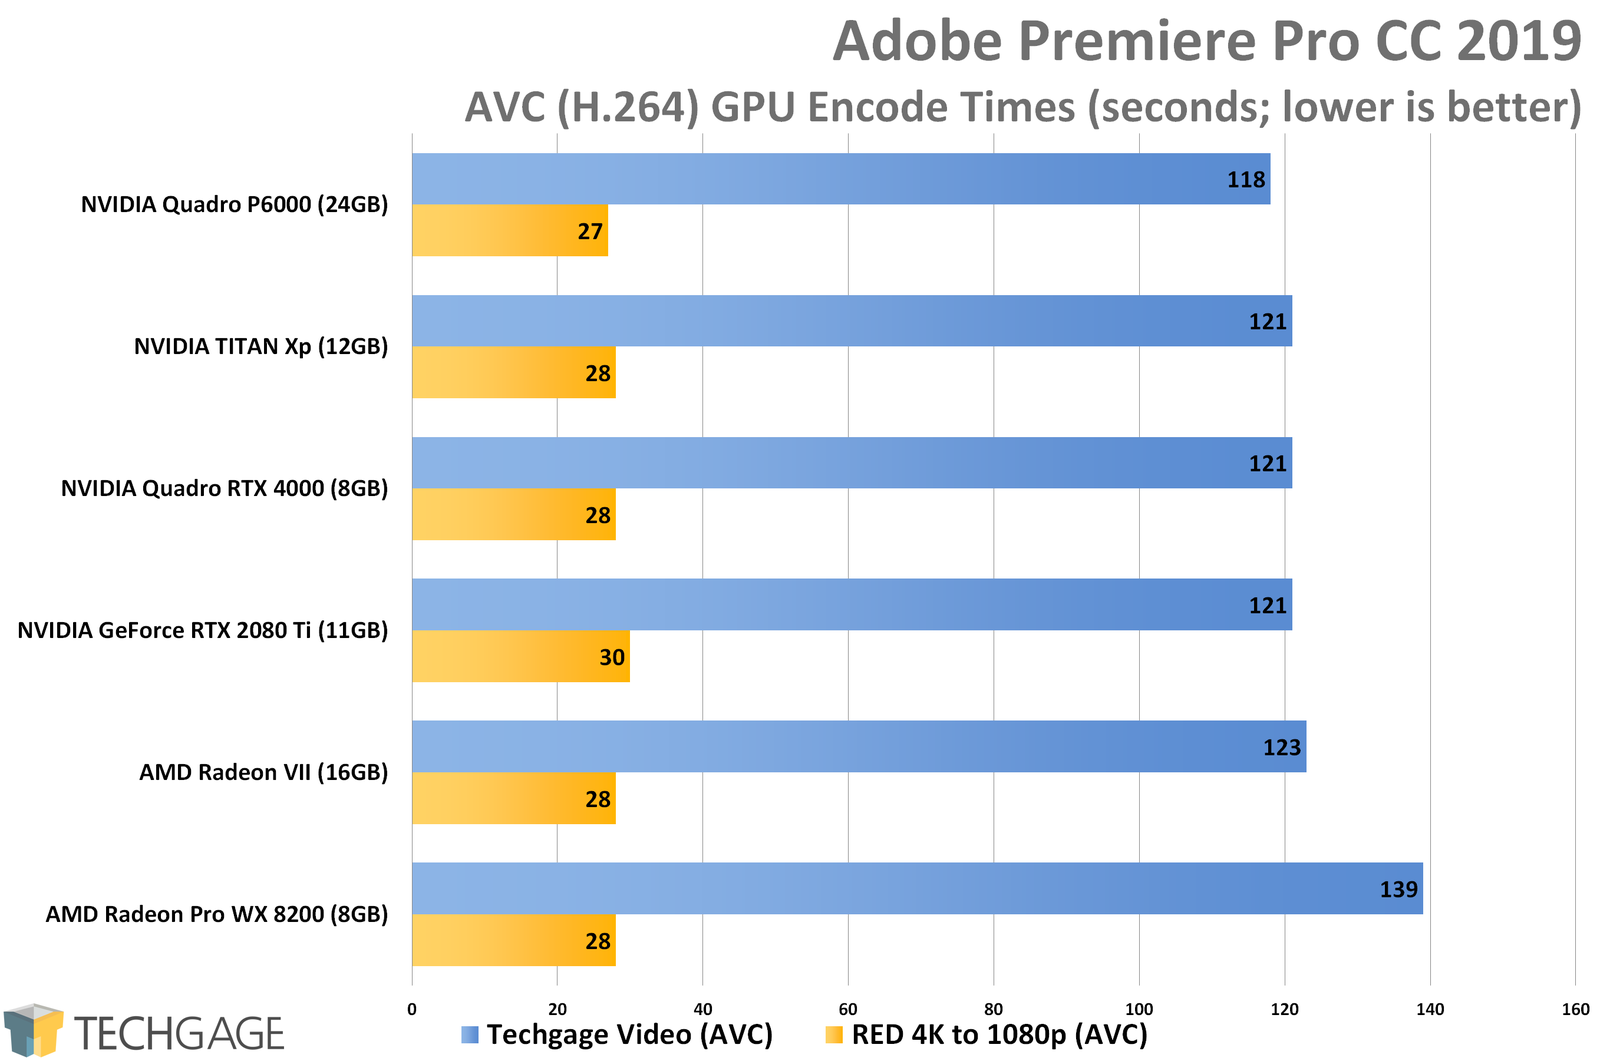 Adobe-Premiere-Pro-AVC-Performance-AMD-Radeon-VII.png